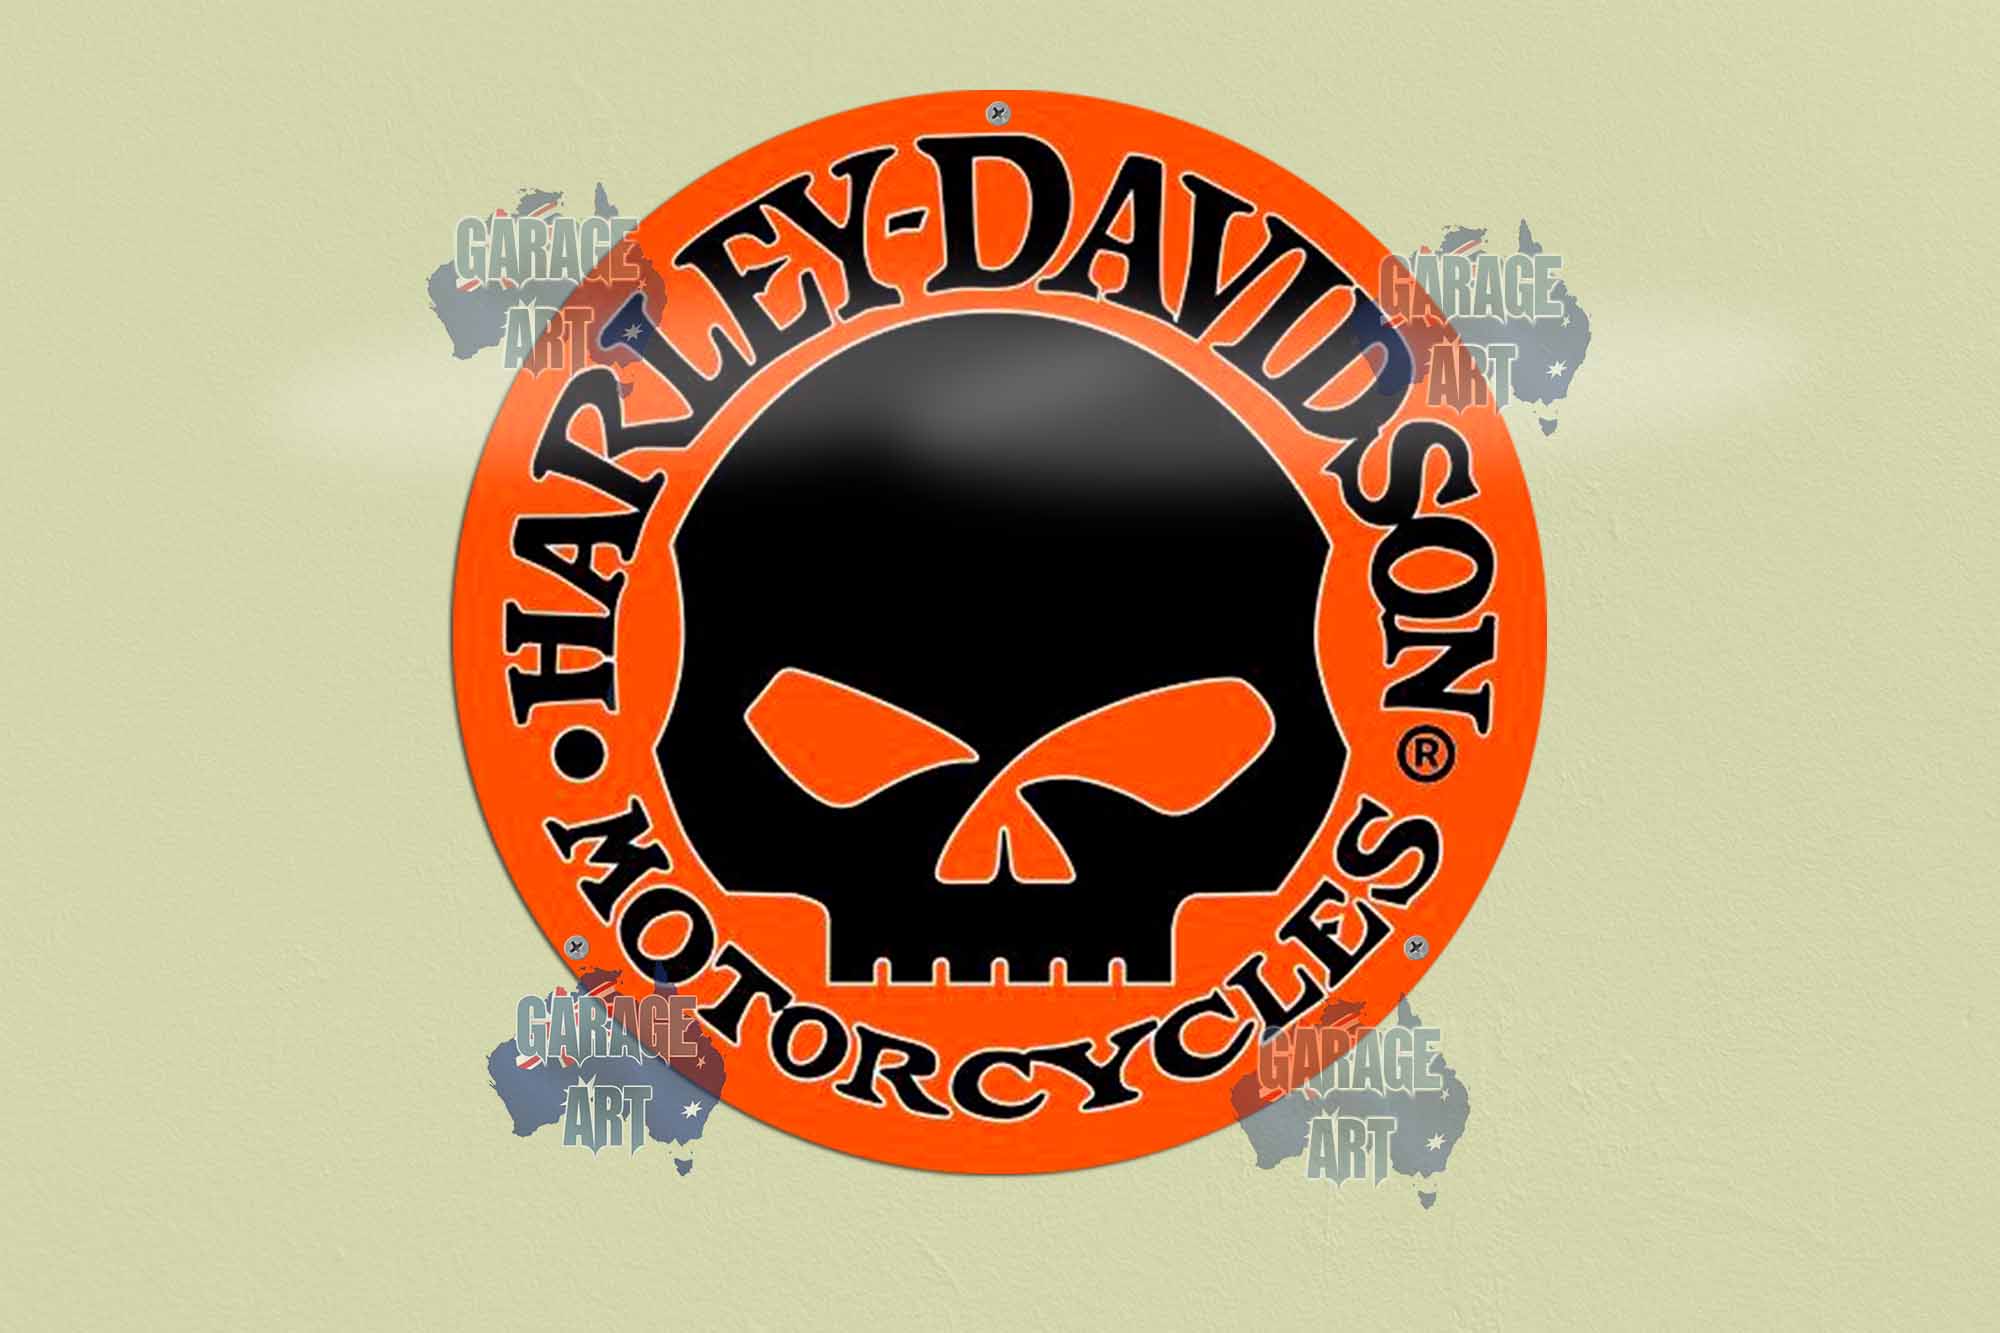 Harley Davidson Motorcycles Willie Logo 355mmDia Tin Sign freeshipping - garageartaustralia